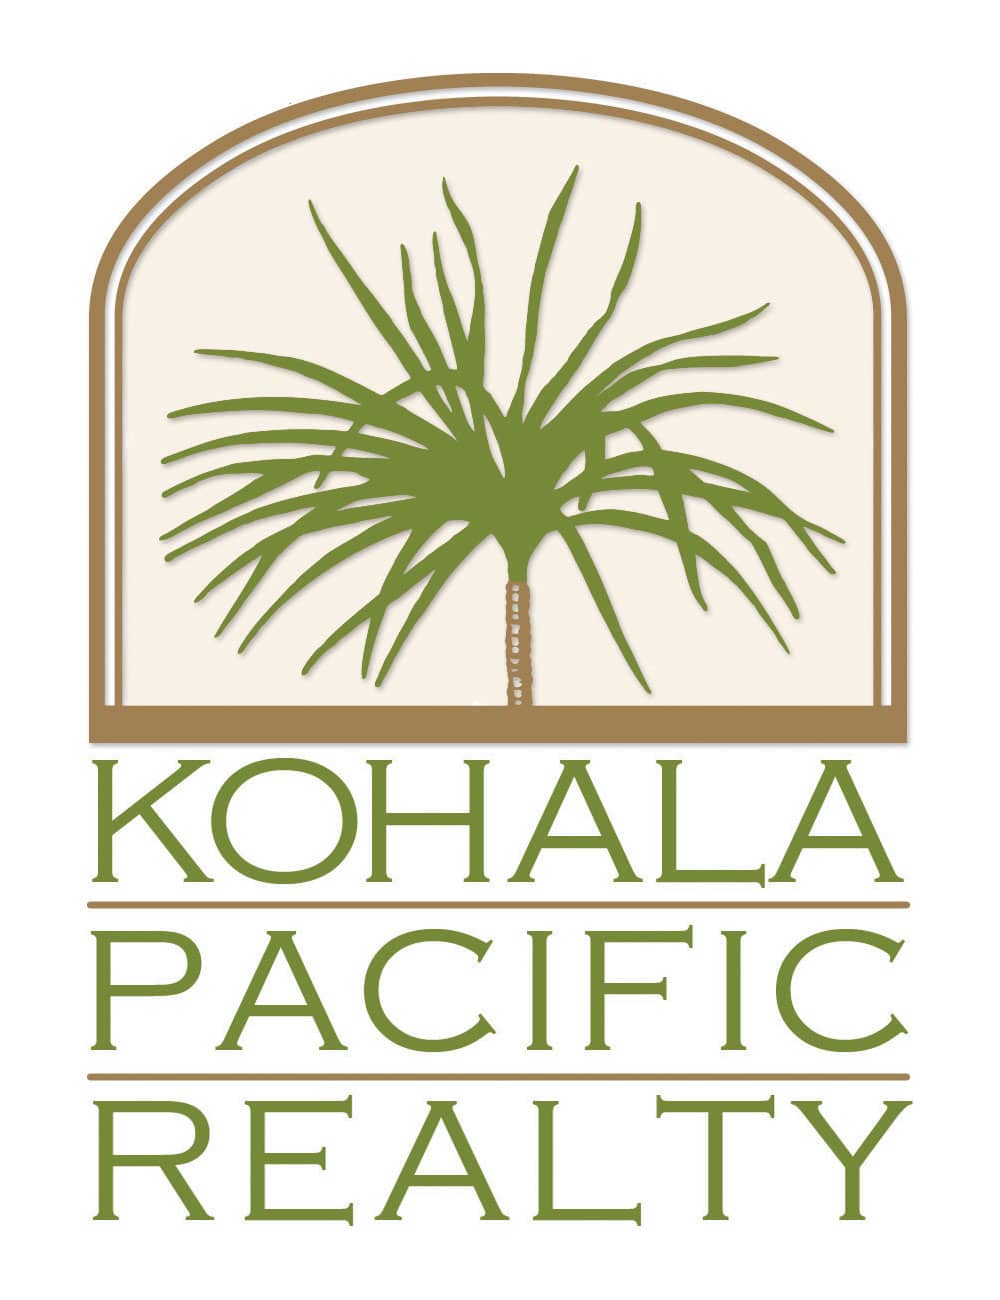 Kohala Pacific Realty Prexisting Brand